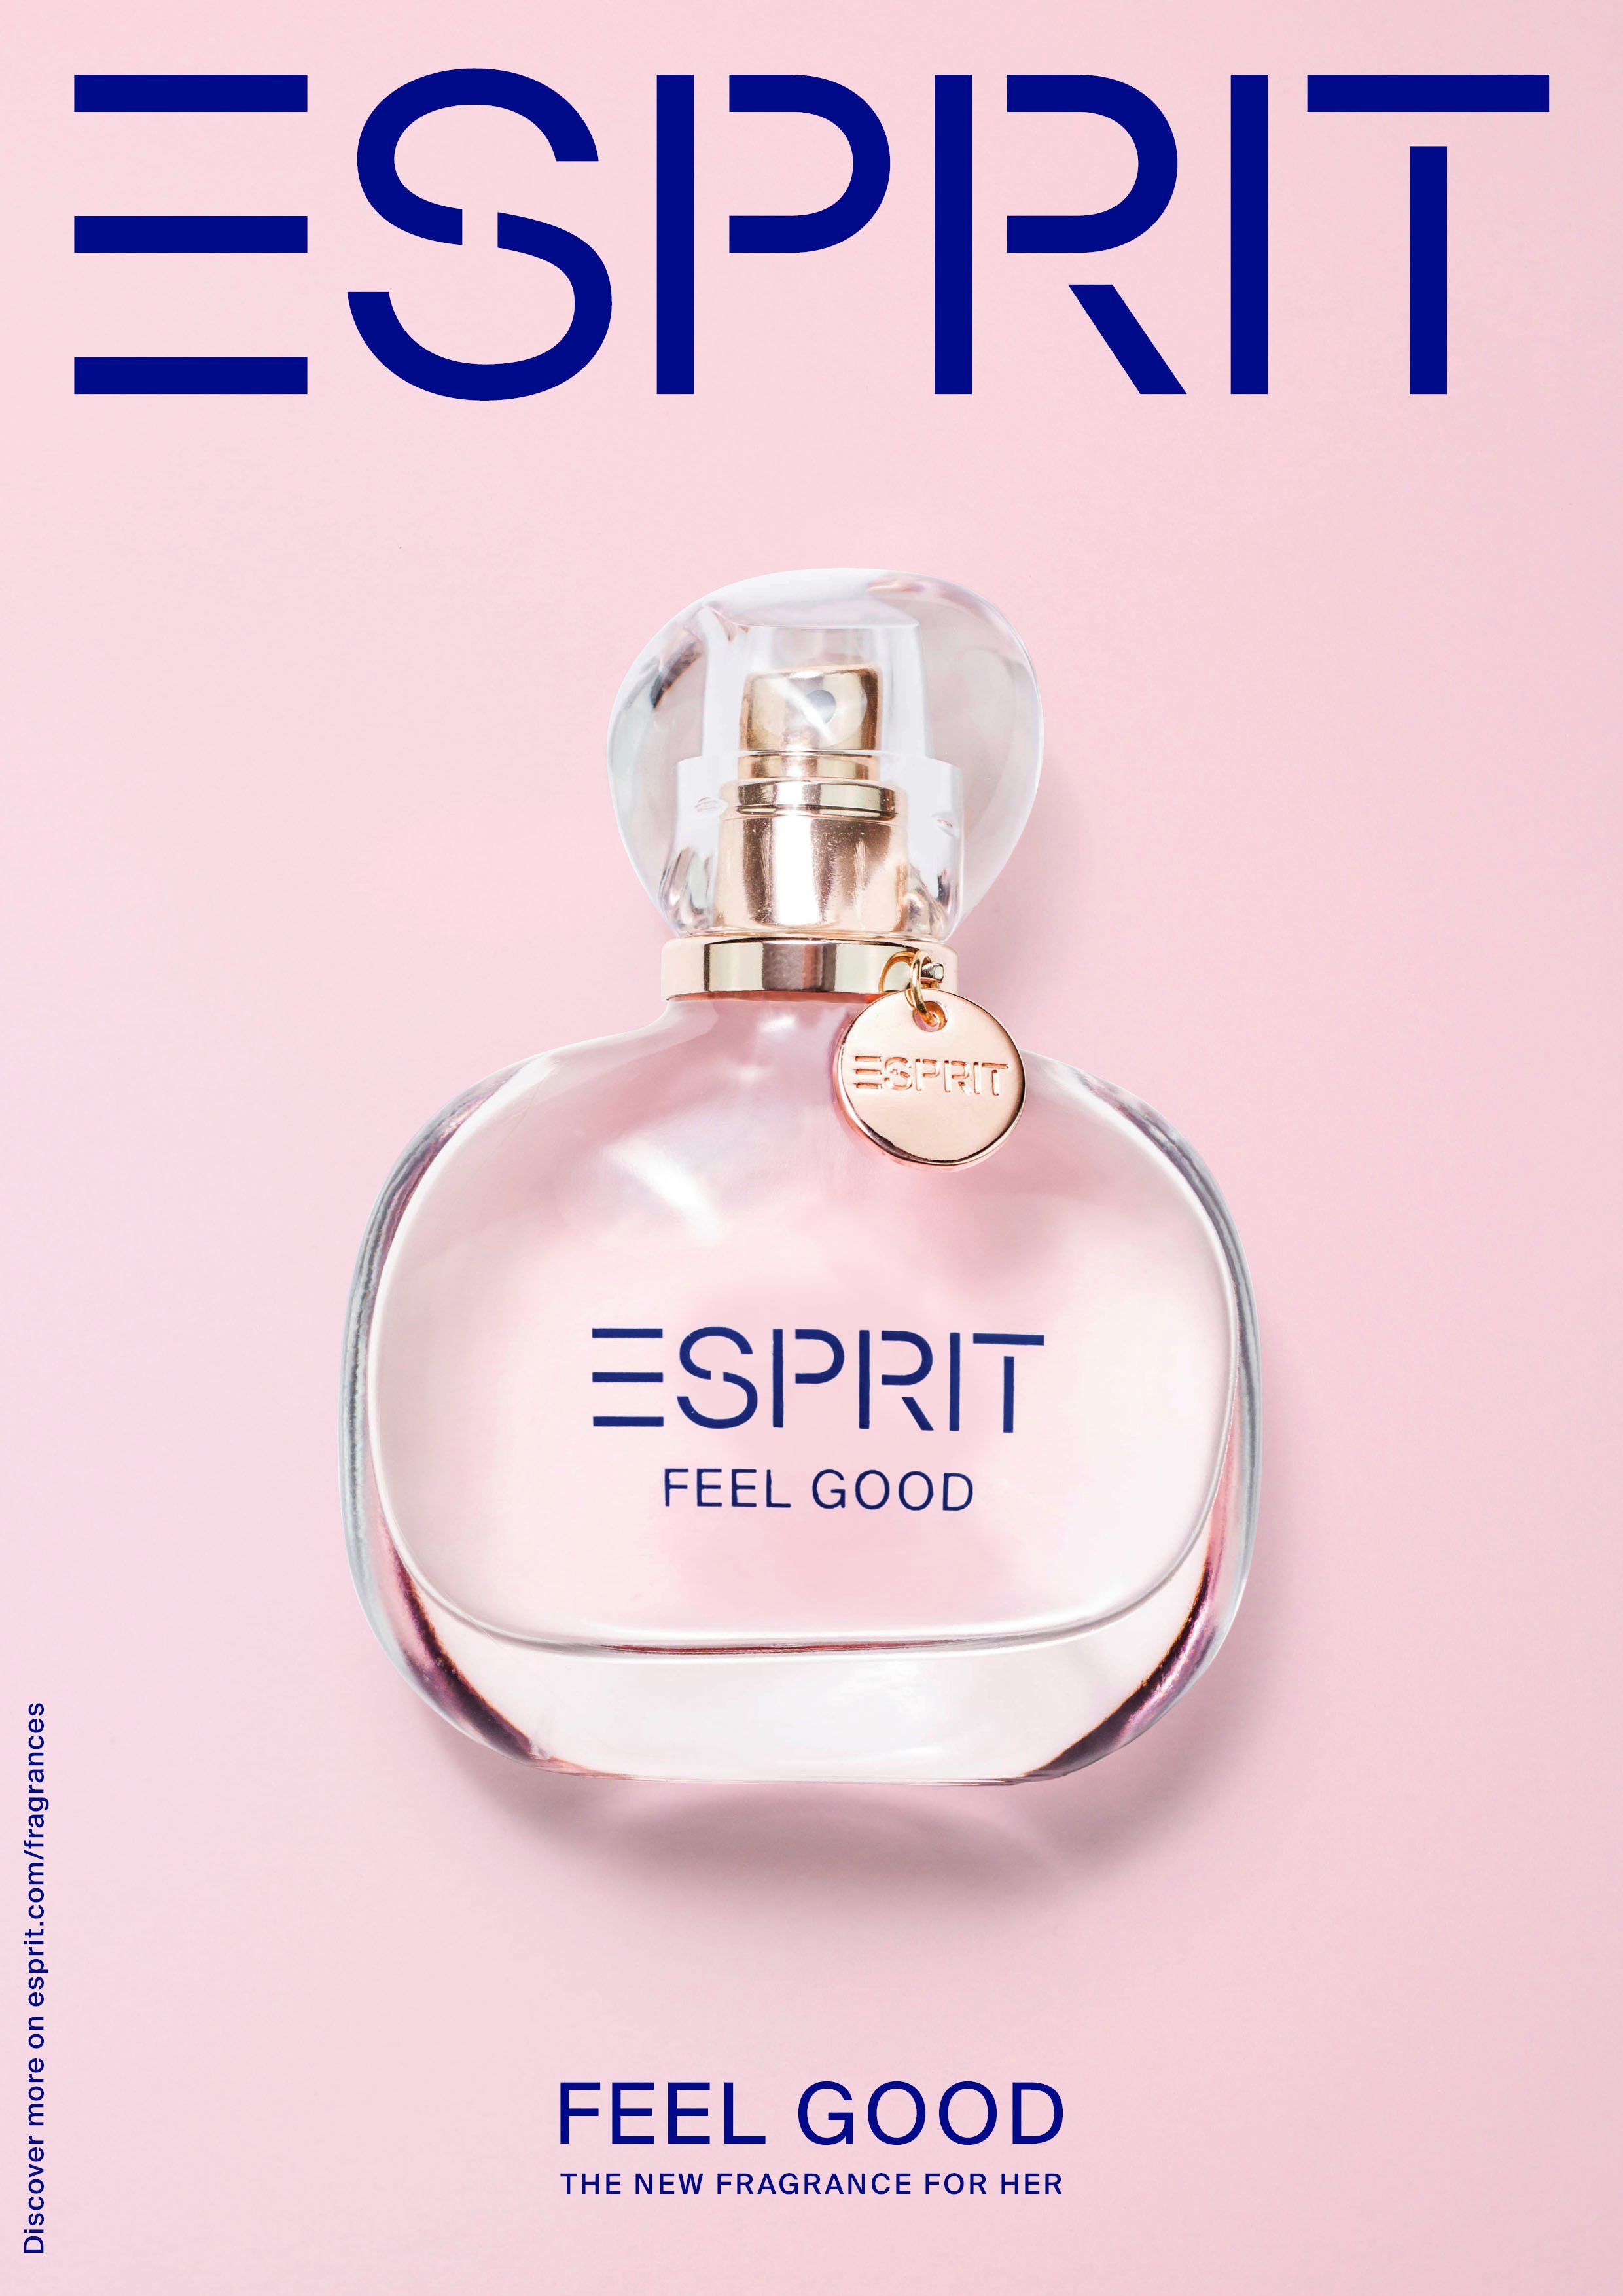 Esprit Eau de FEEL EdP 20 GOOD her ml Parfum for